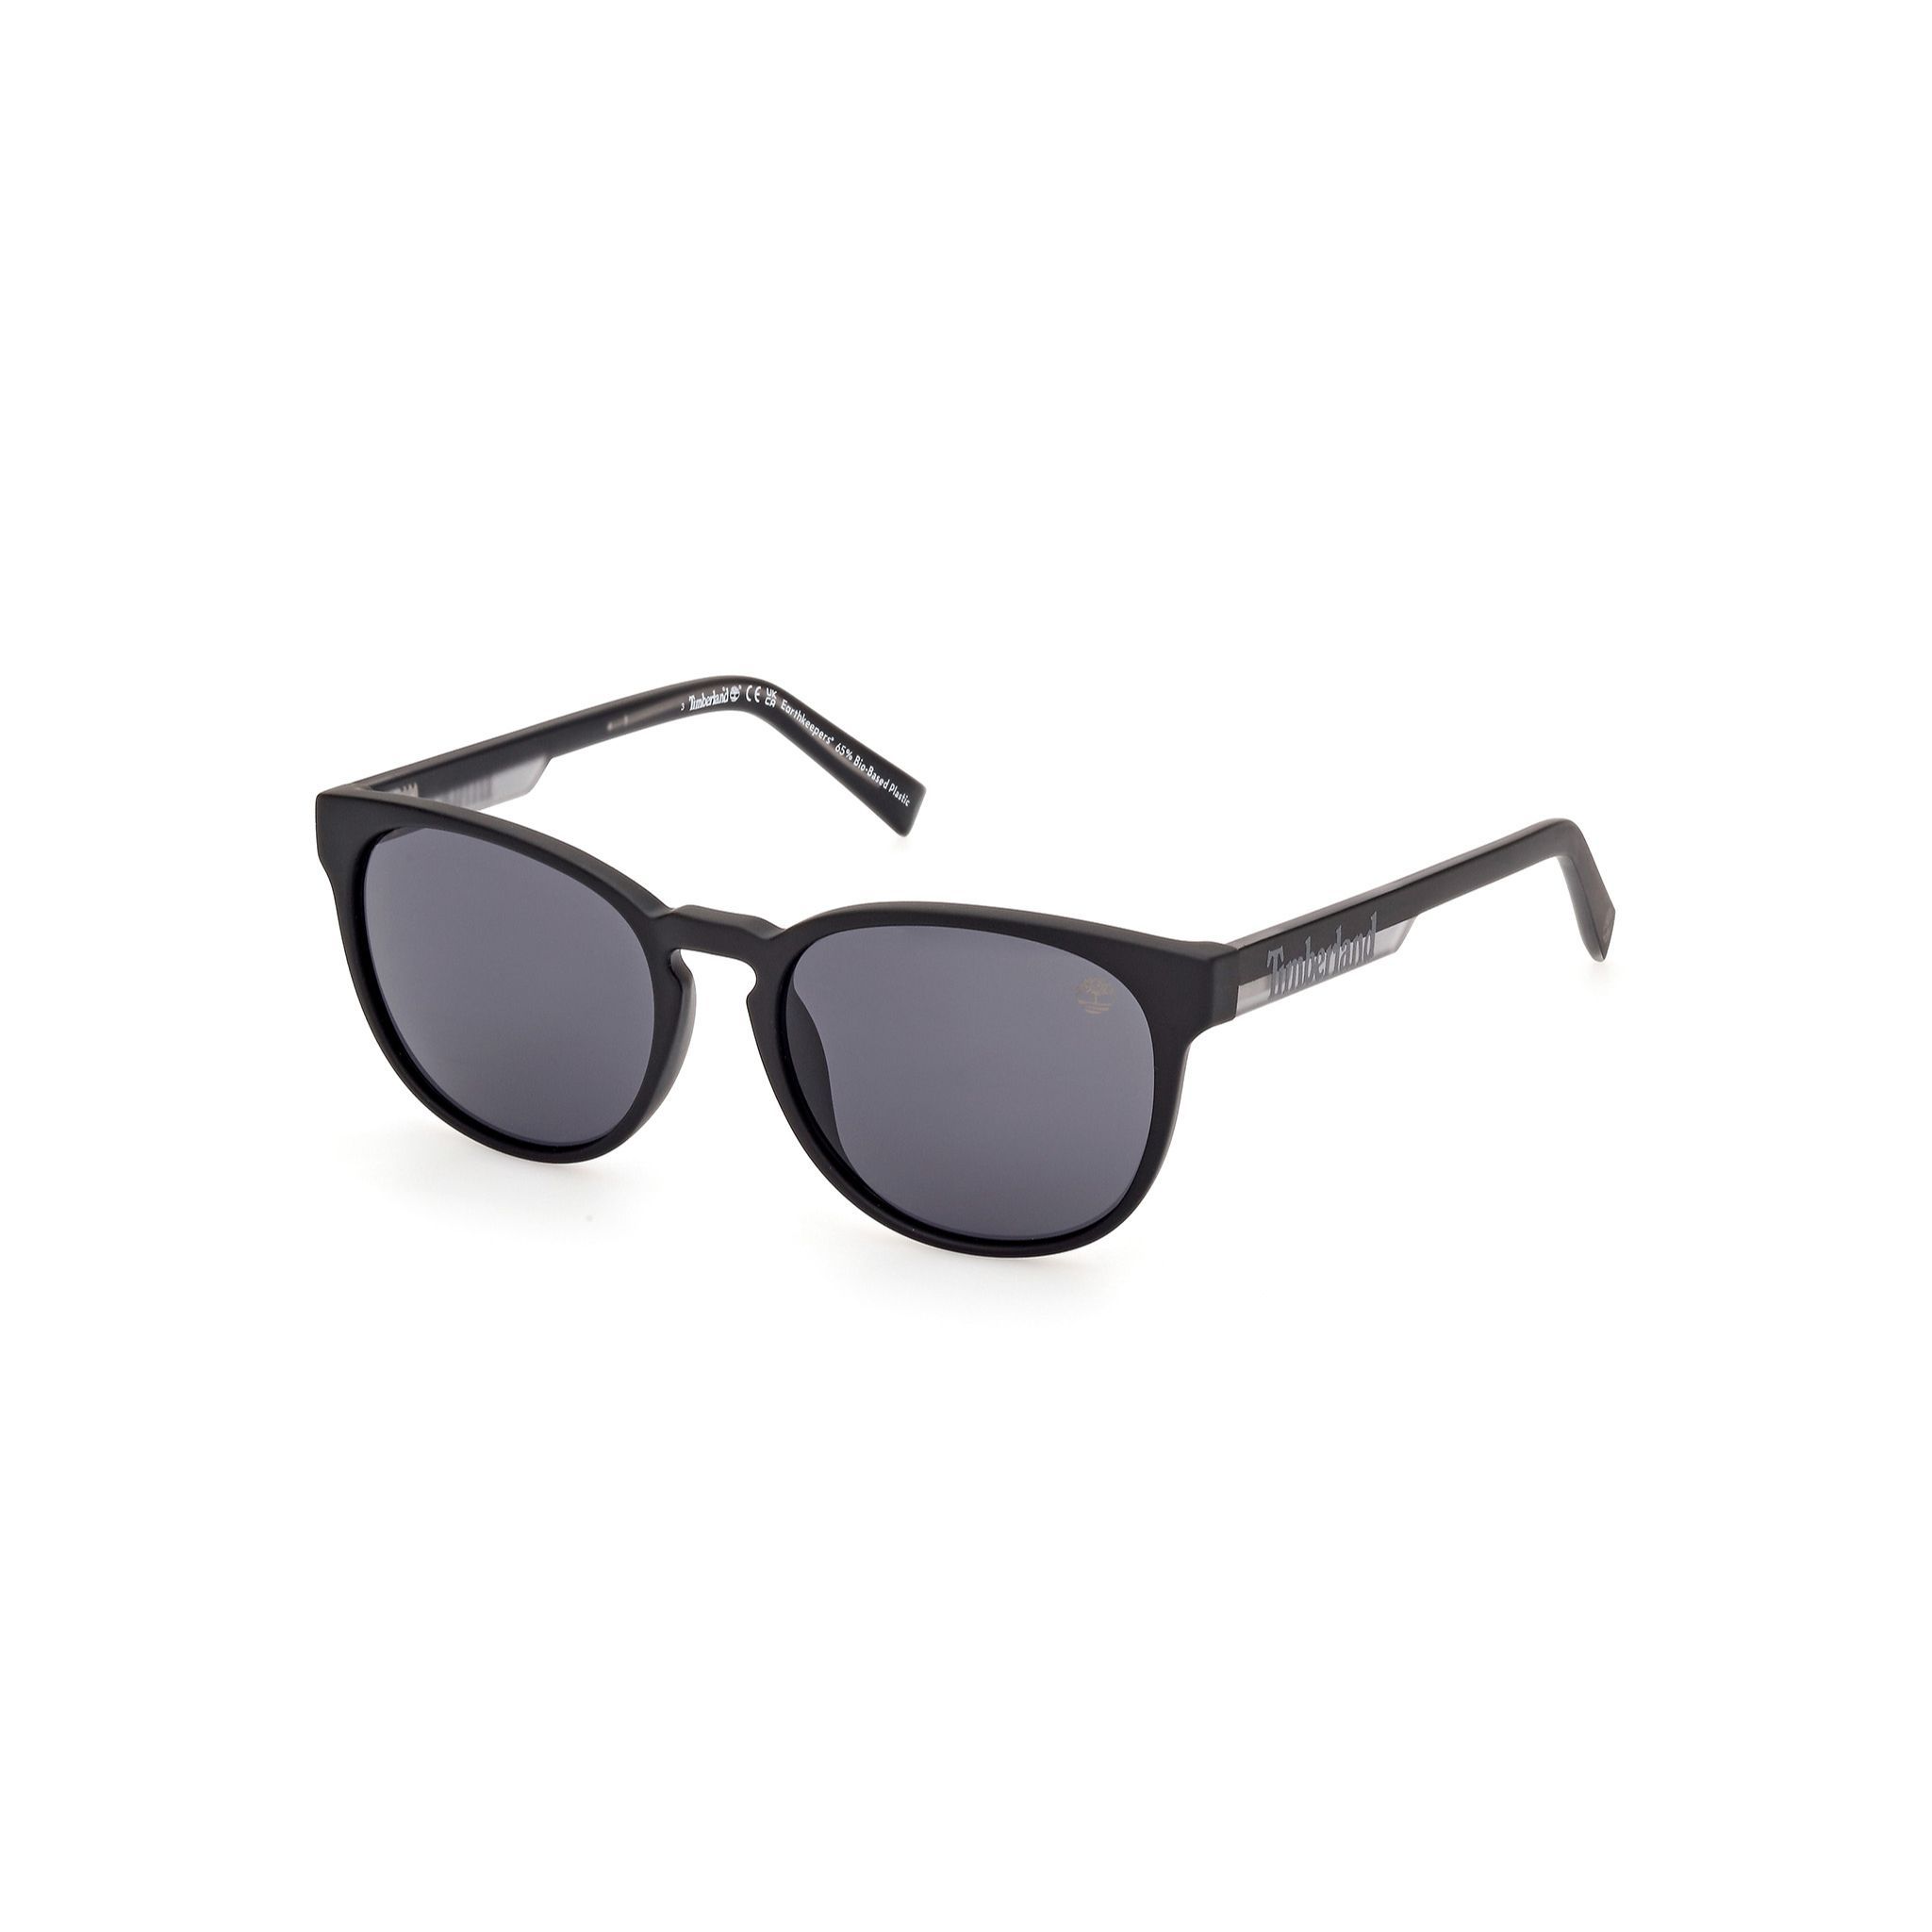 TB00014 Round Sunglasses 02A - size 51